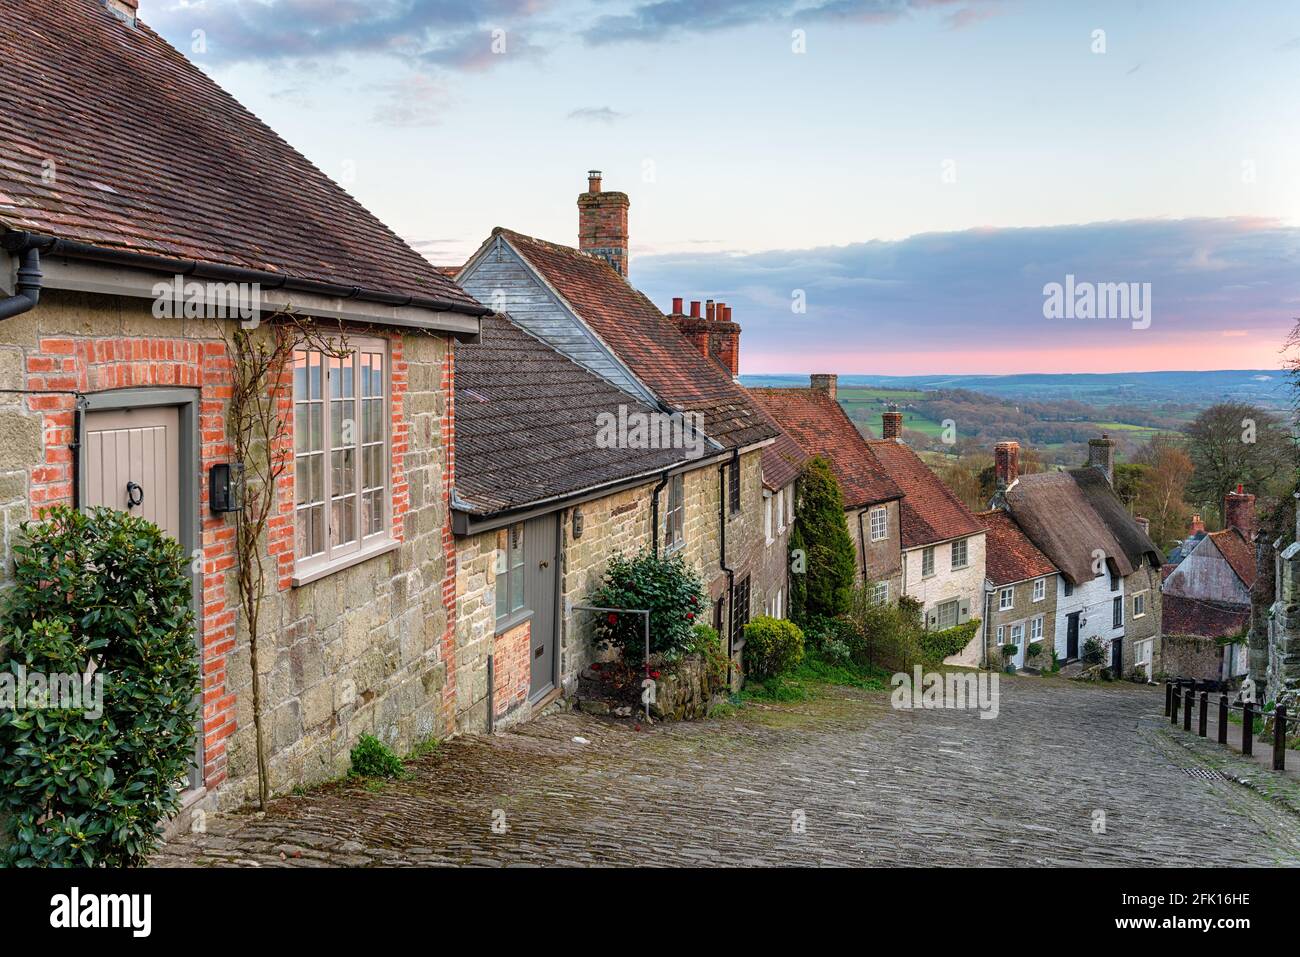 Bonitas casas en una empinada calle adoquinada en Gold Hill En Shaftesbury en Dorset Foto de stock